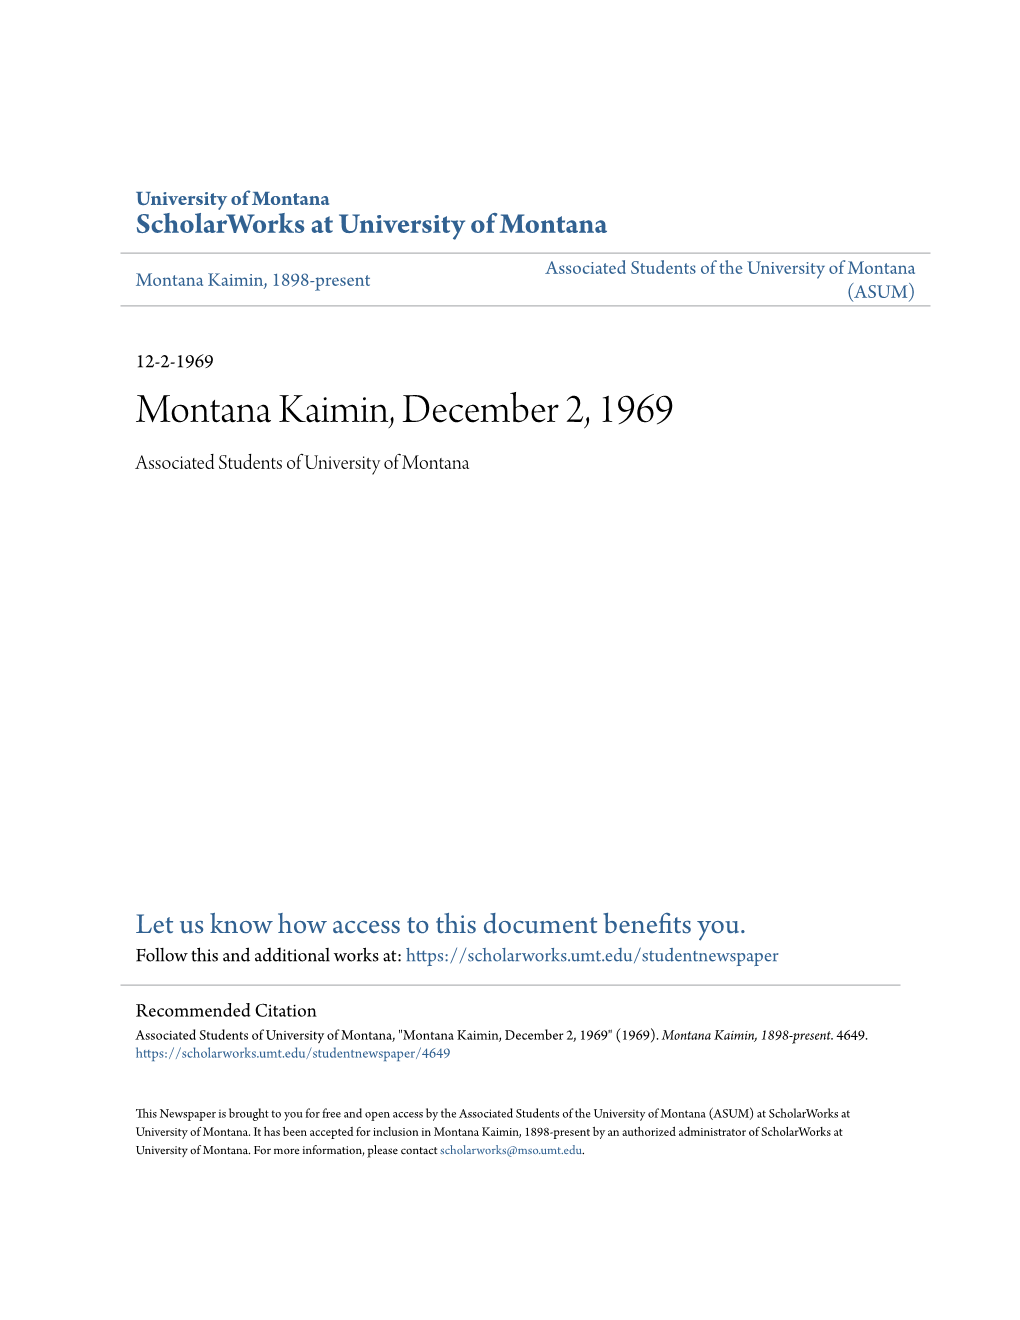 Montana Kaimin, December 2, 1969 Associated Students of University of Montana